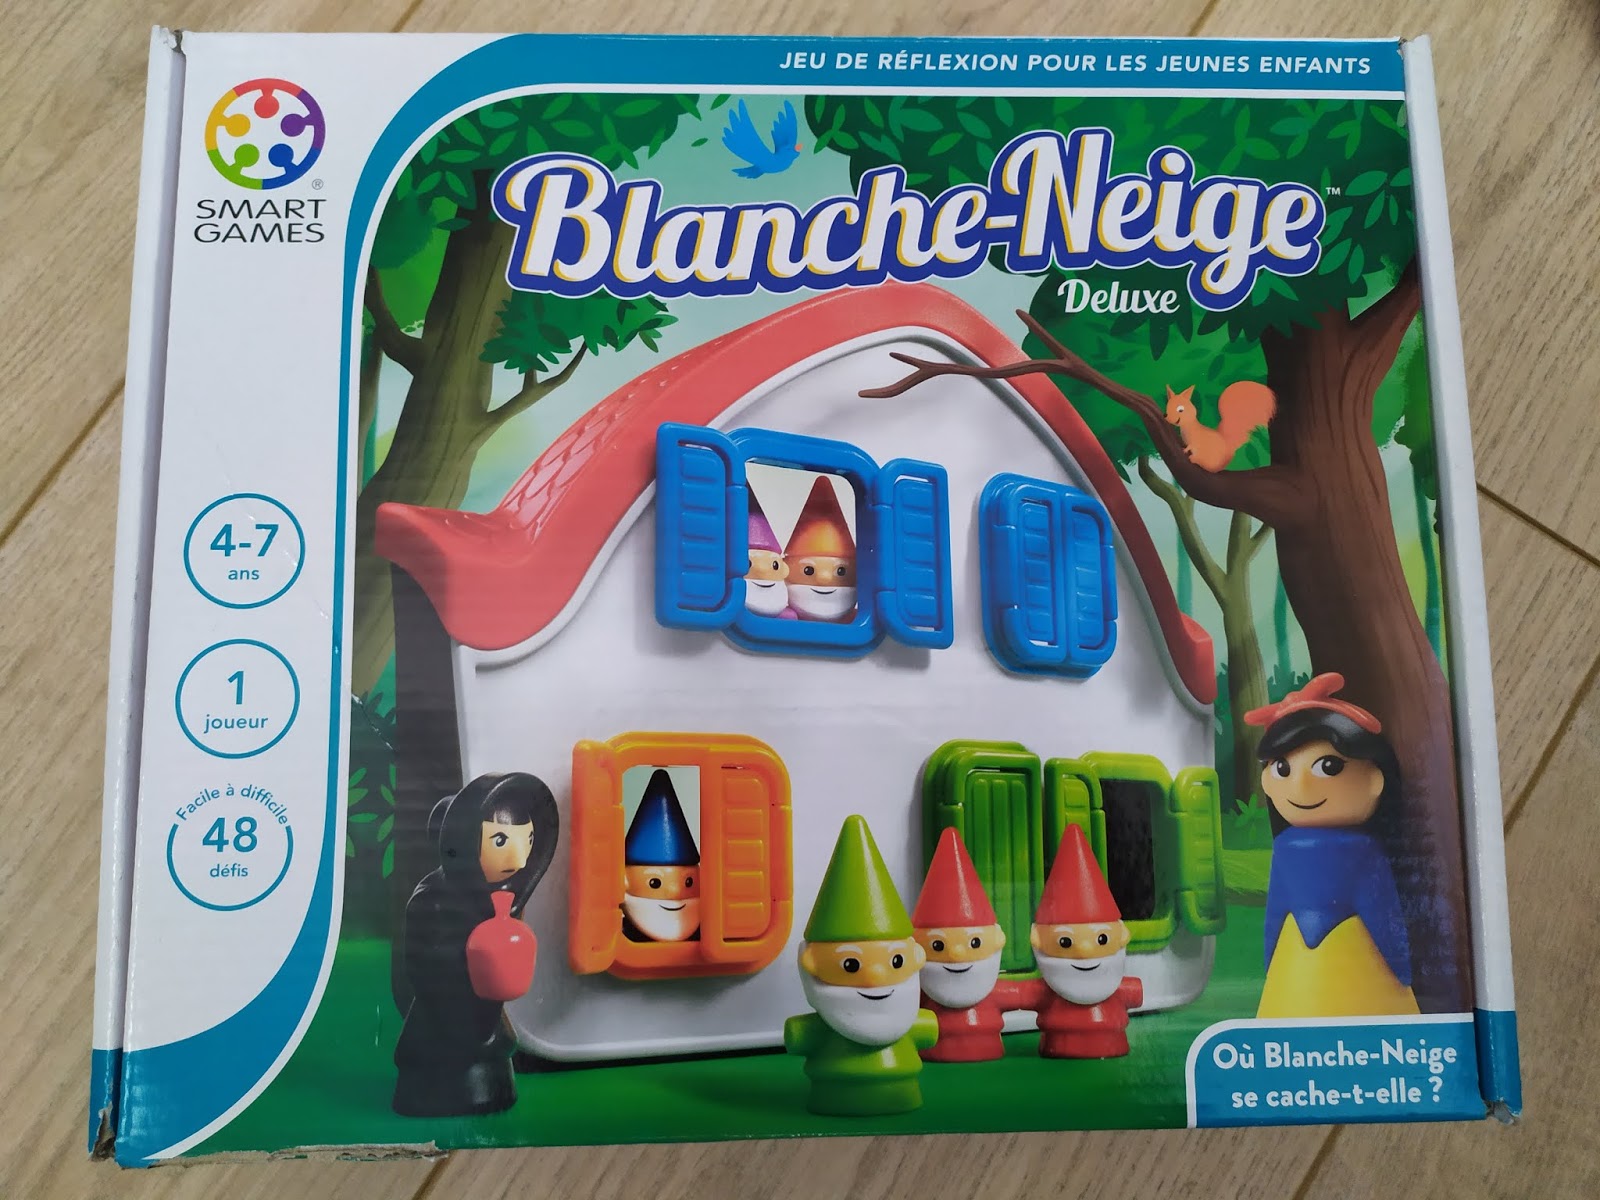 Smart games - Blanche neige FR